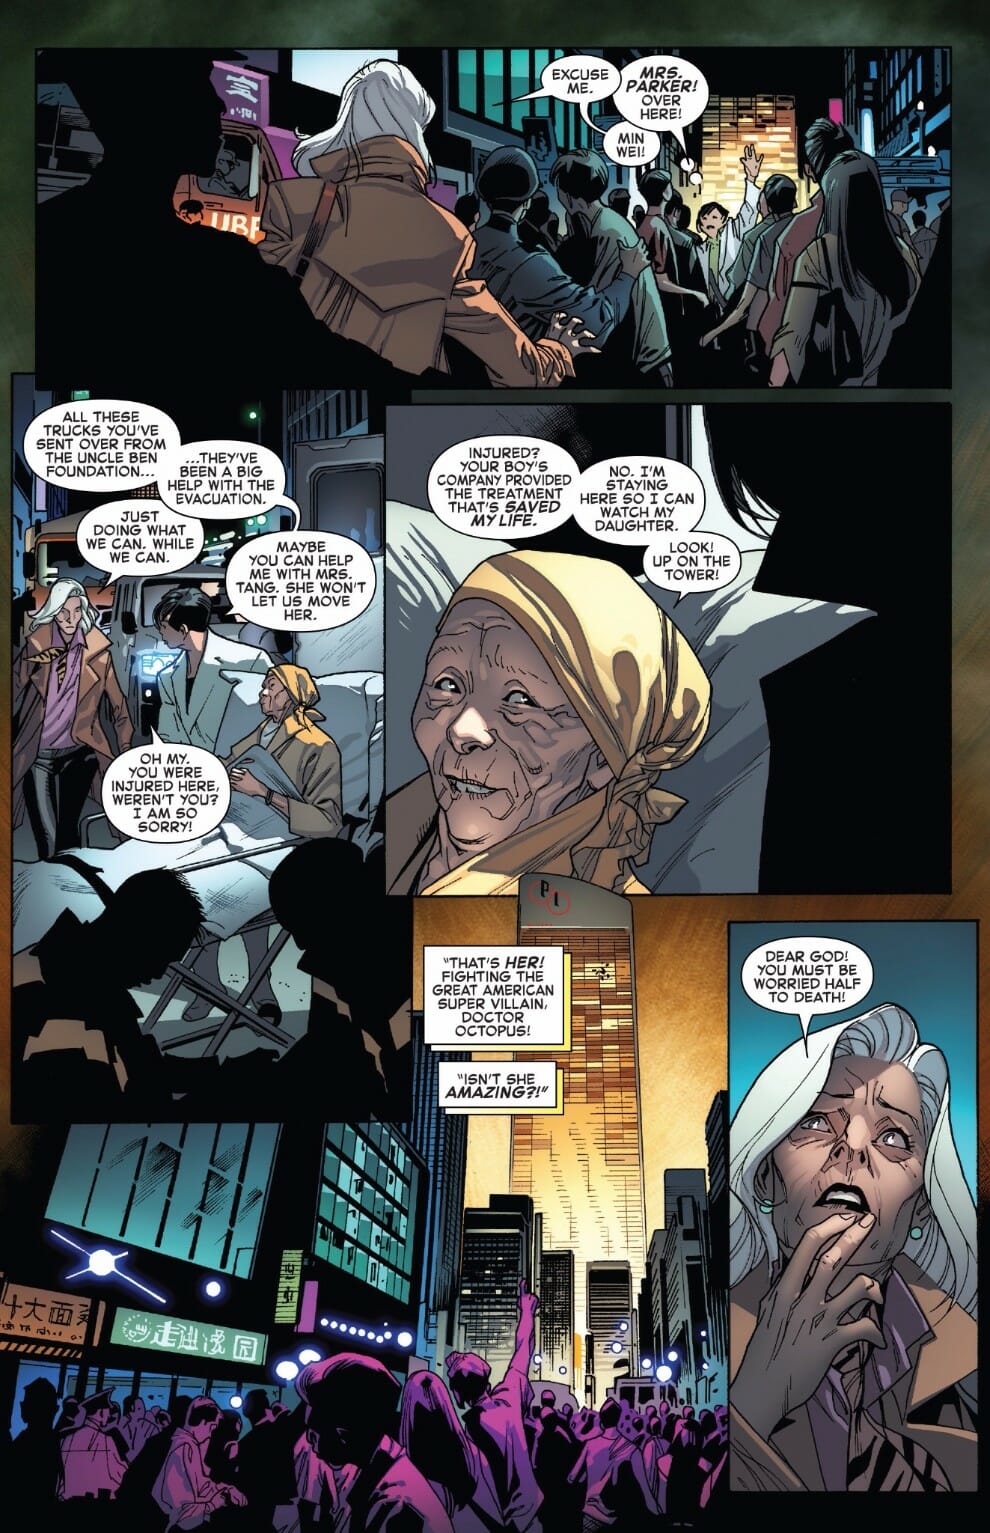 Amazing SpiderMan 31 3 Comic Book Revolution